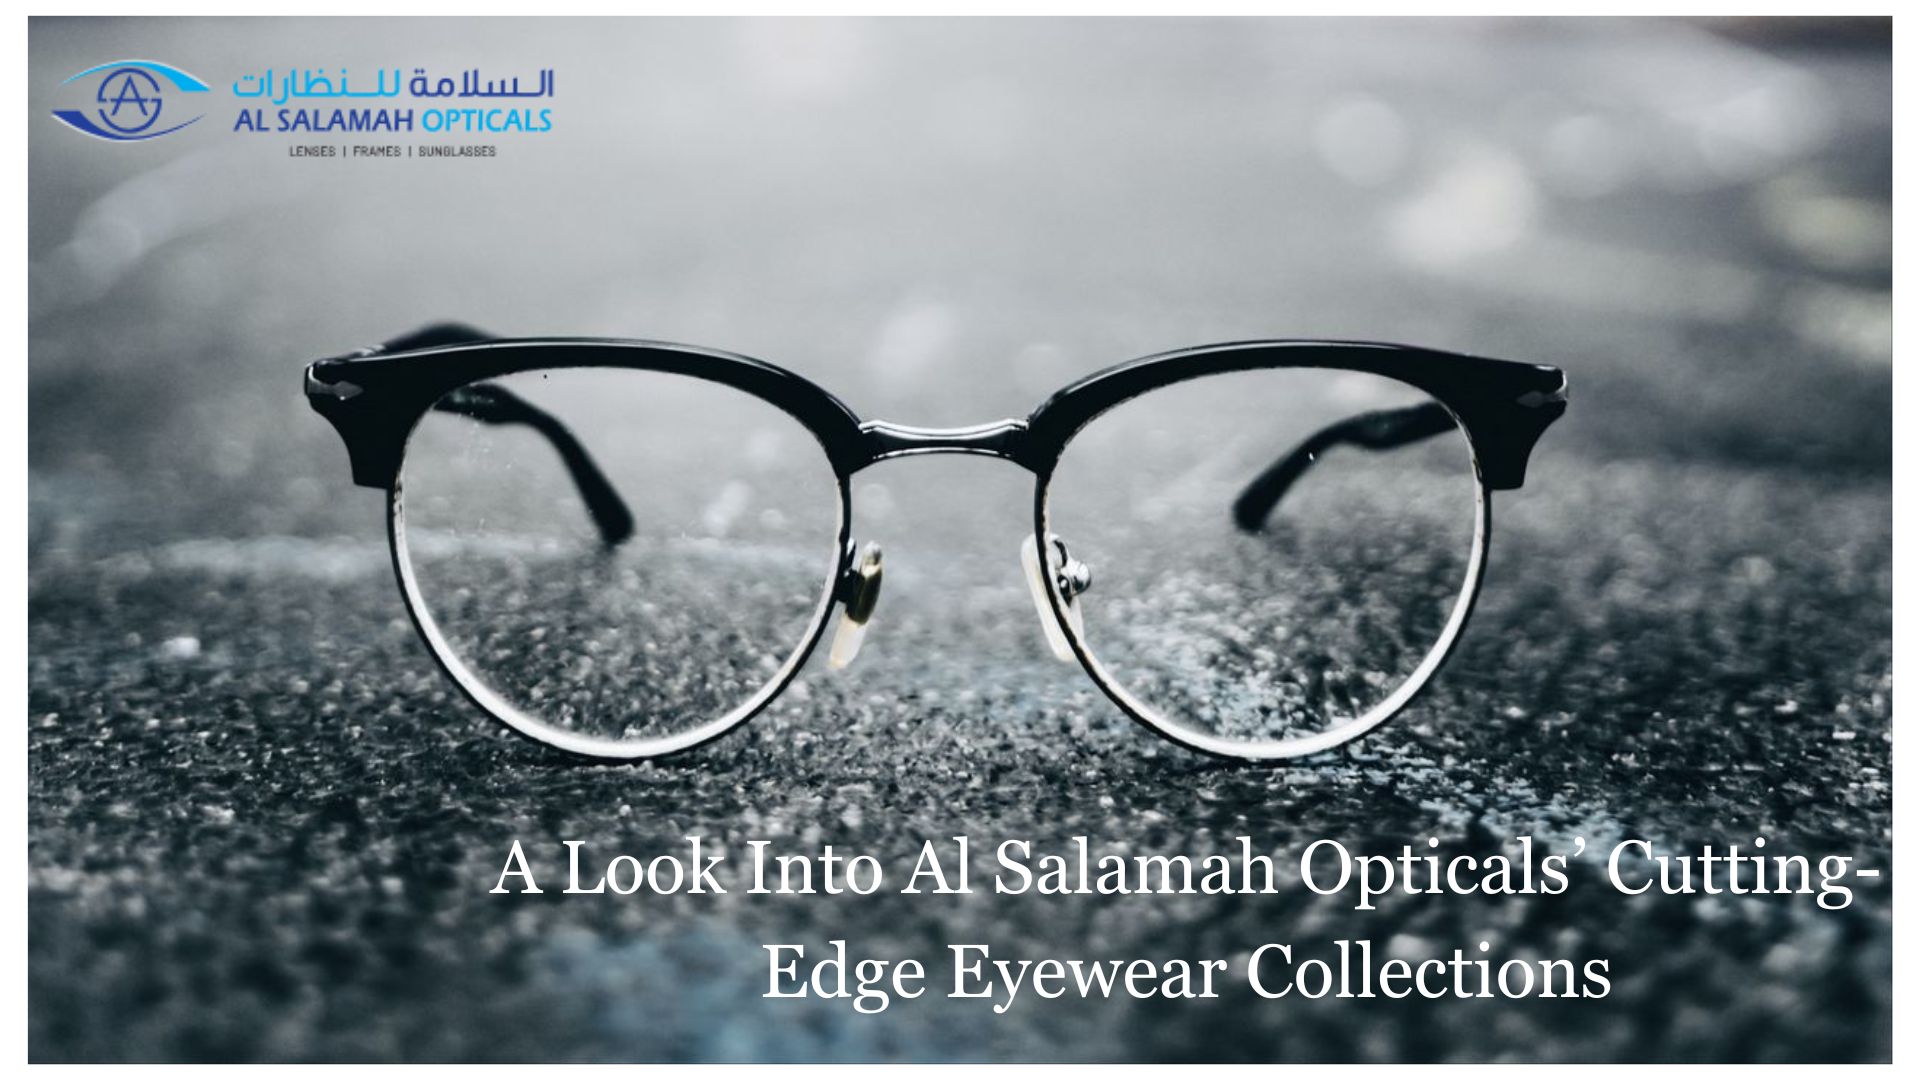 A Look Into Al Salamah Opticals’ Cutting-Edge Eyewear Collections